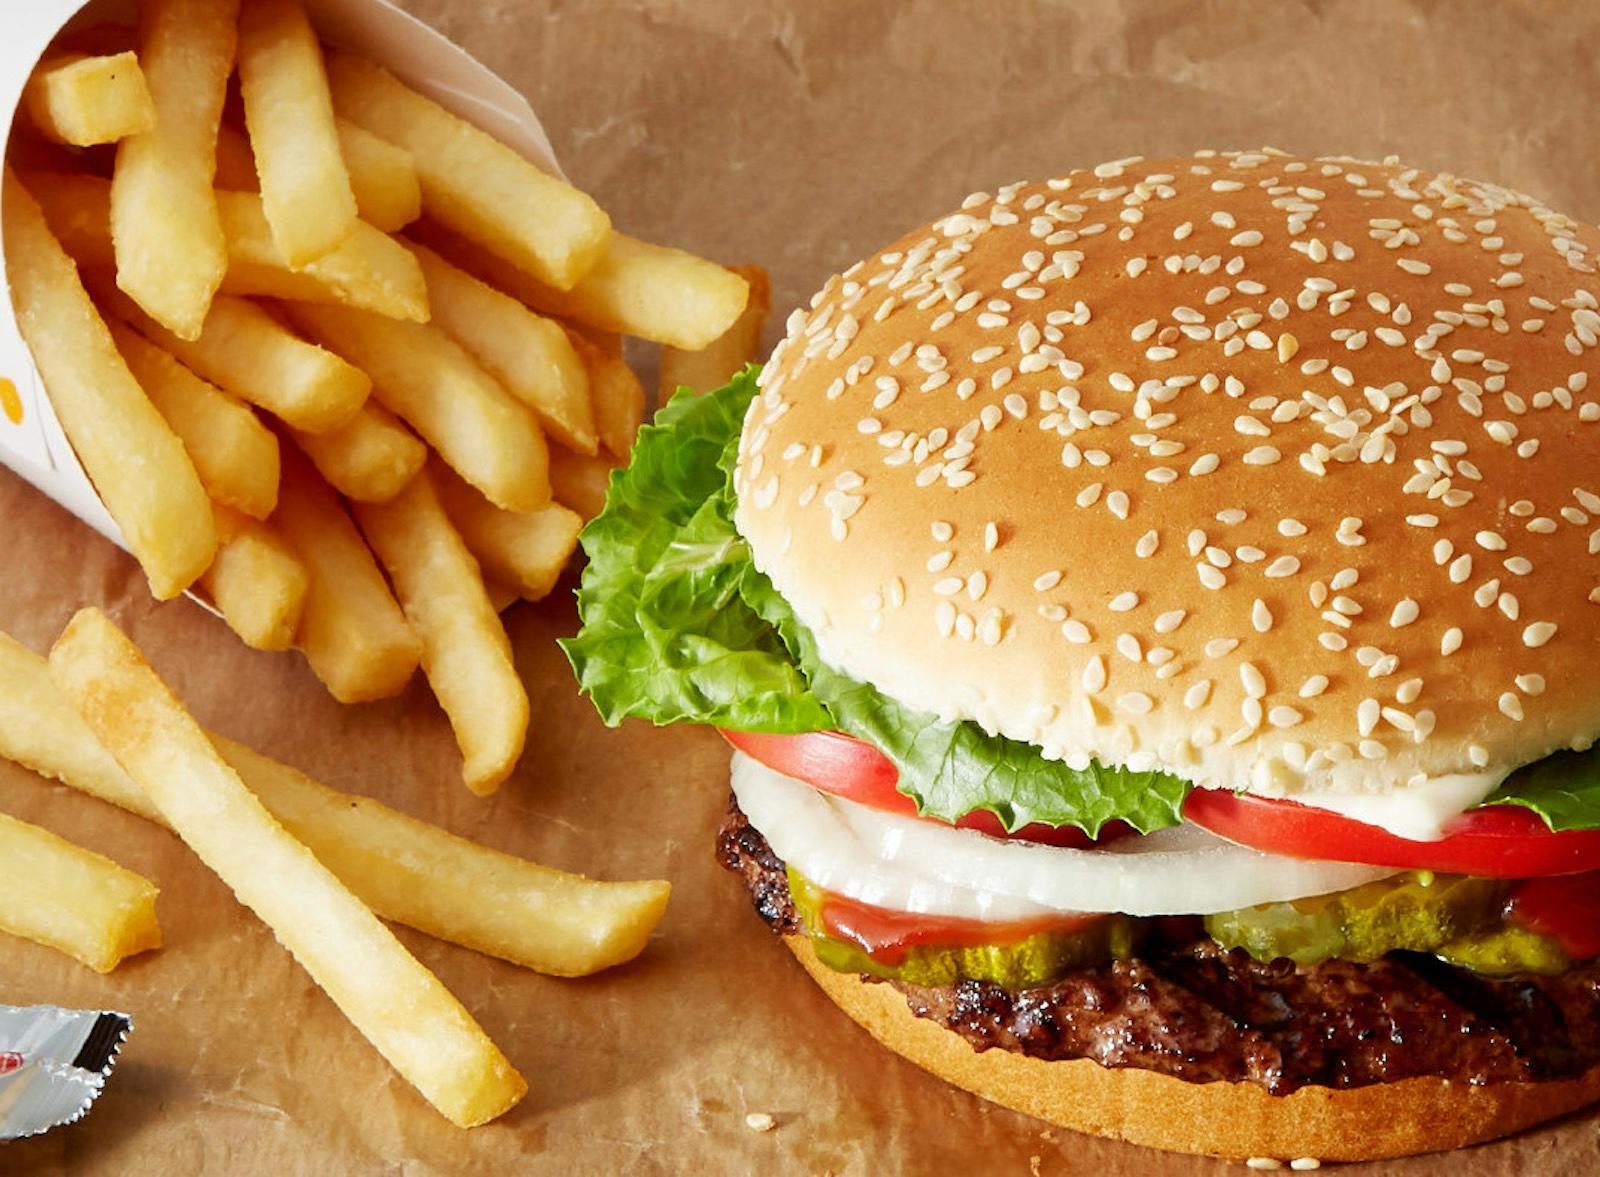 Burger King - La Crosse Mormon Coulee Rd in La Crosse - Highlight